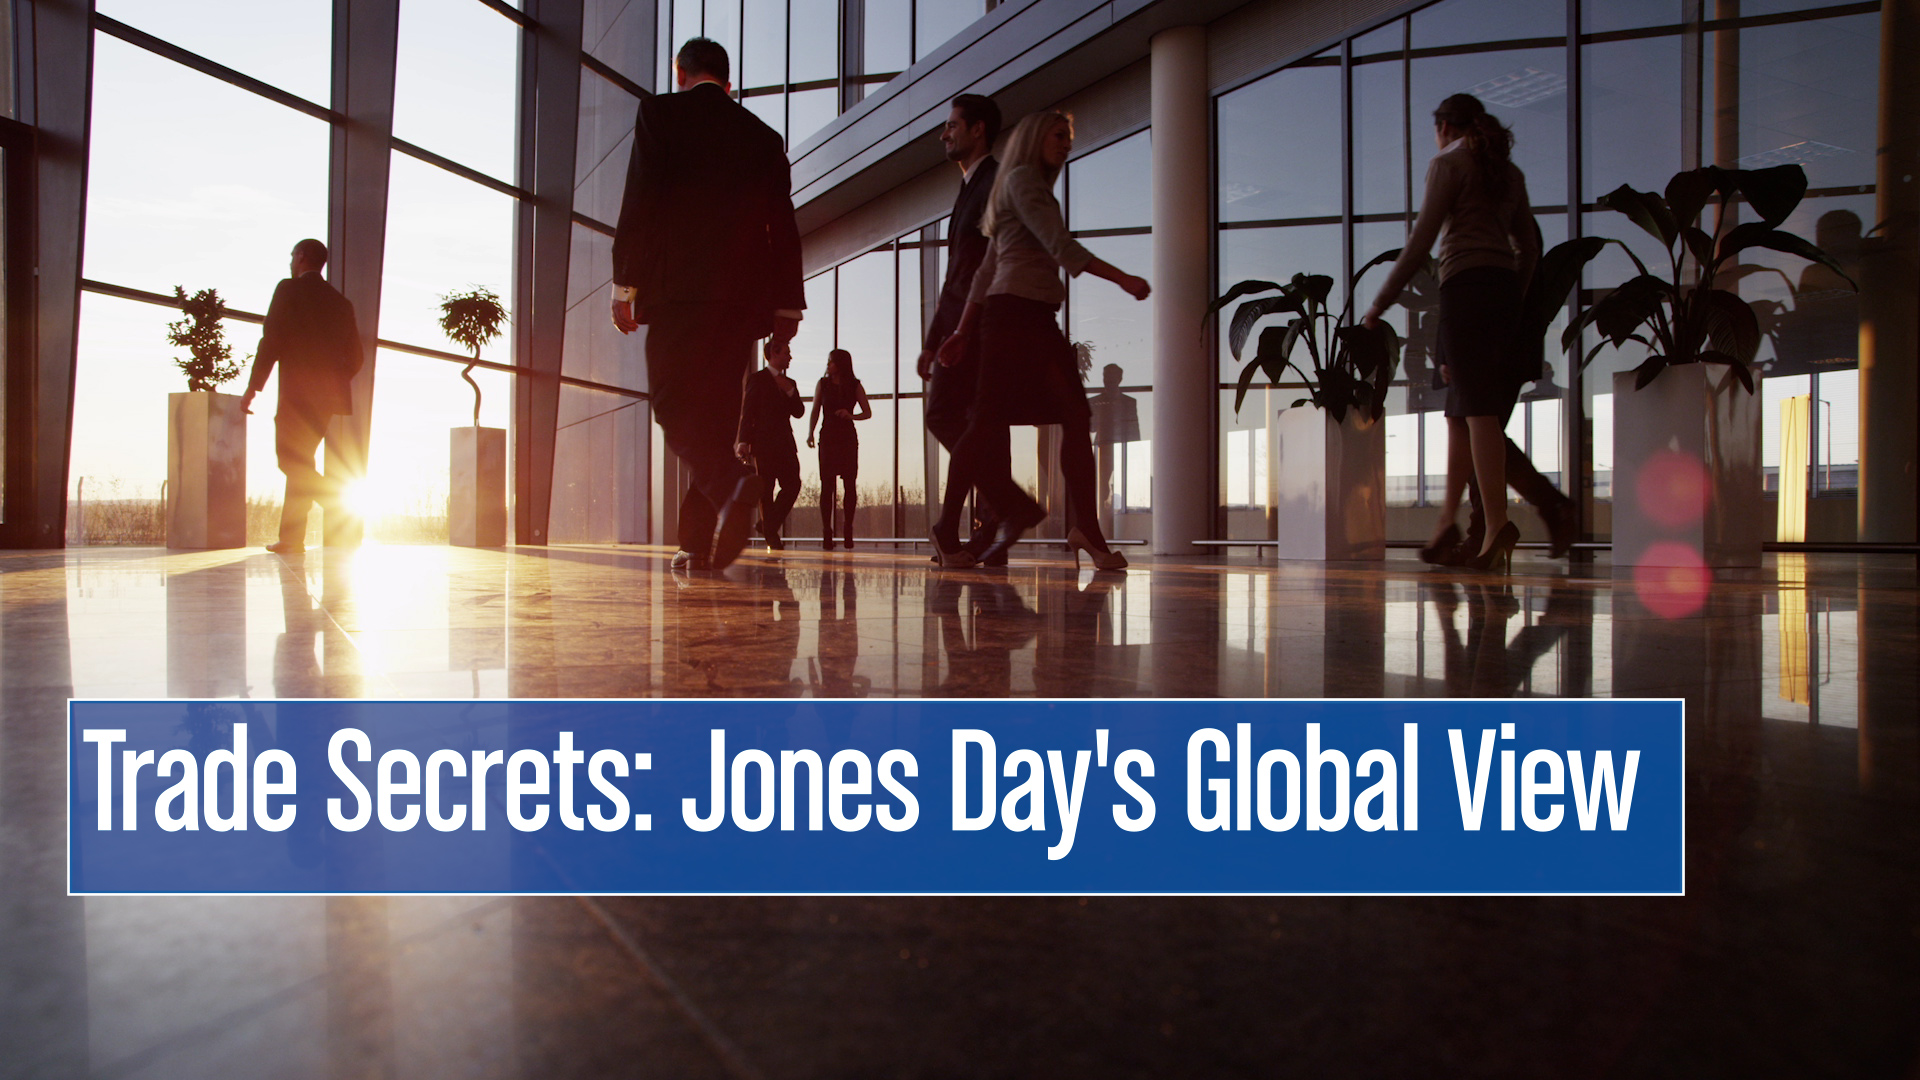 Trade Secrets: Jones Day's Global View